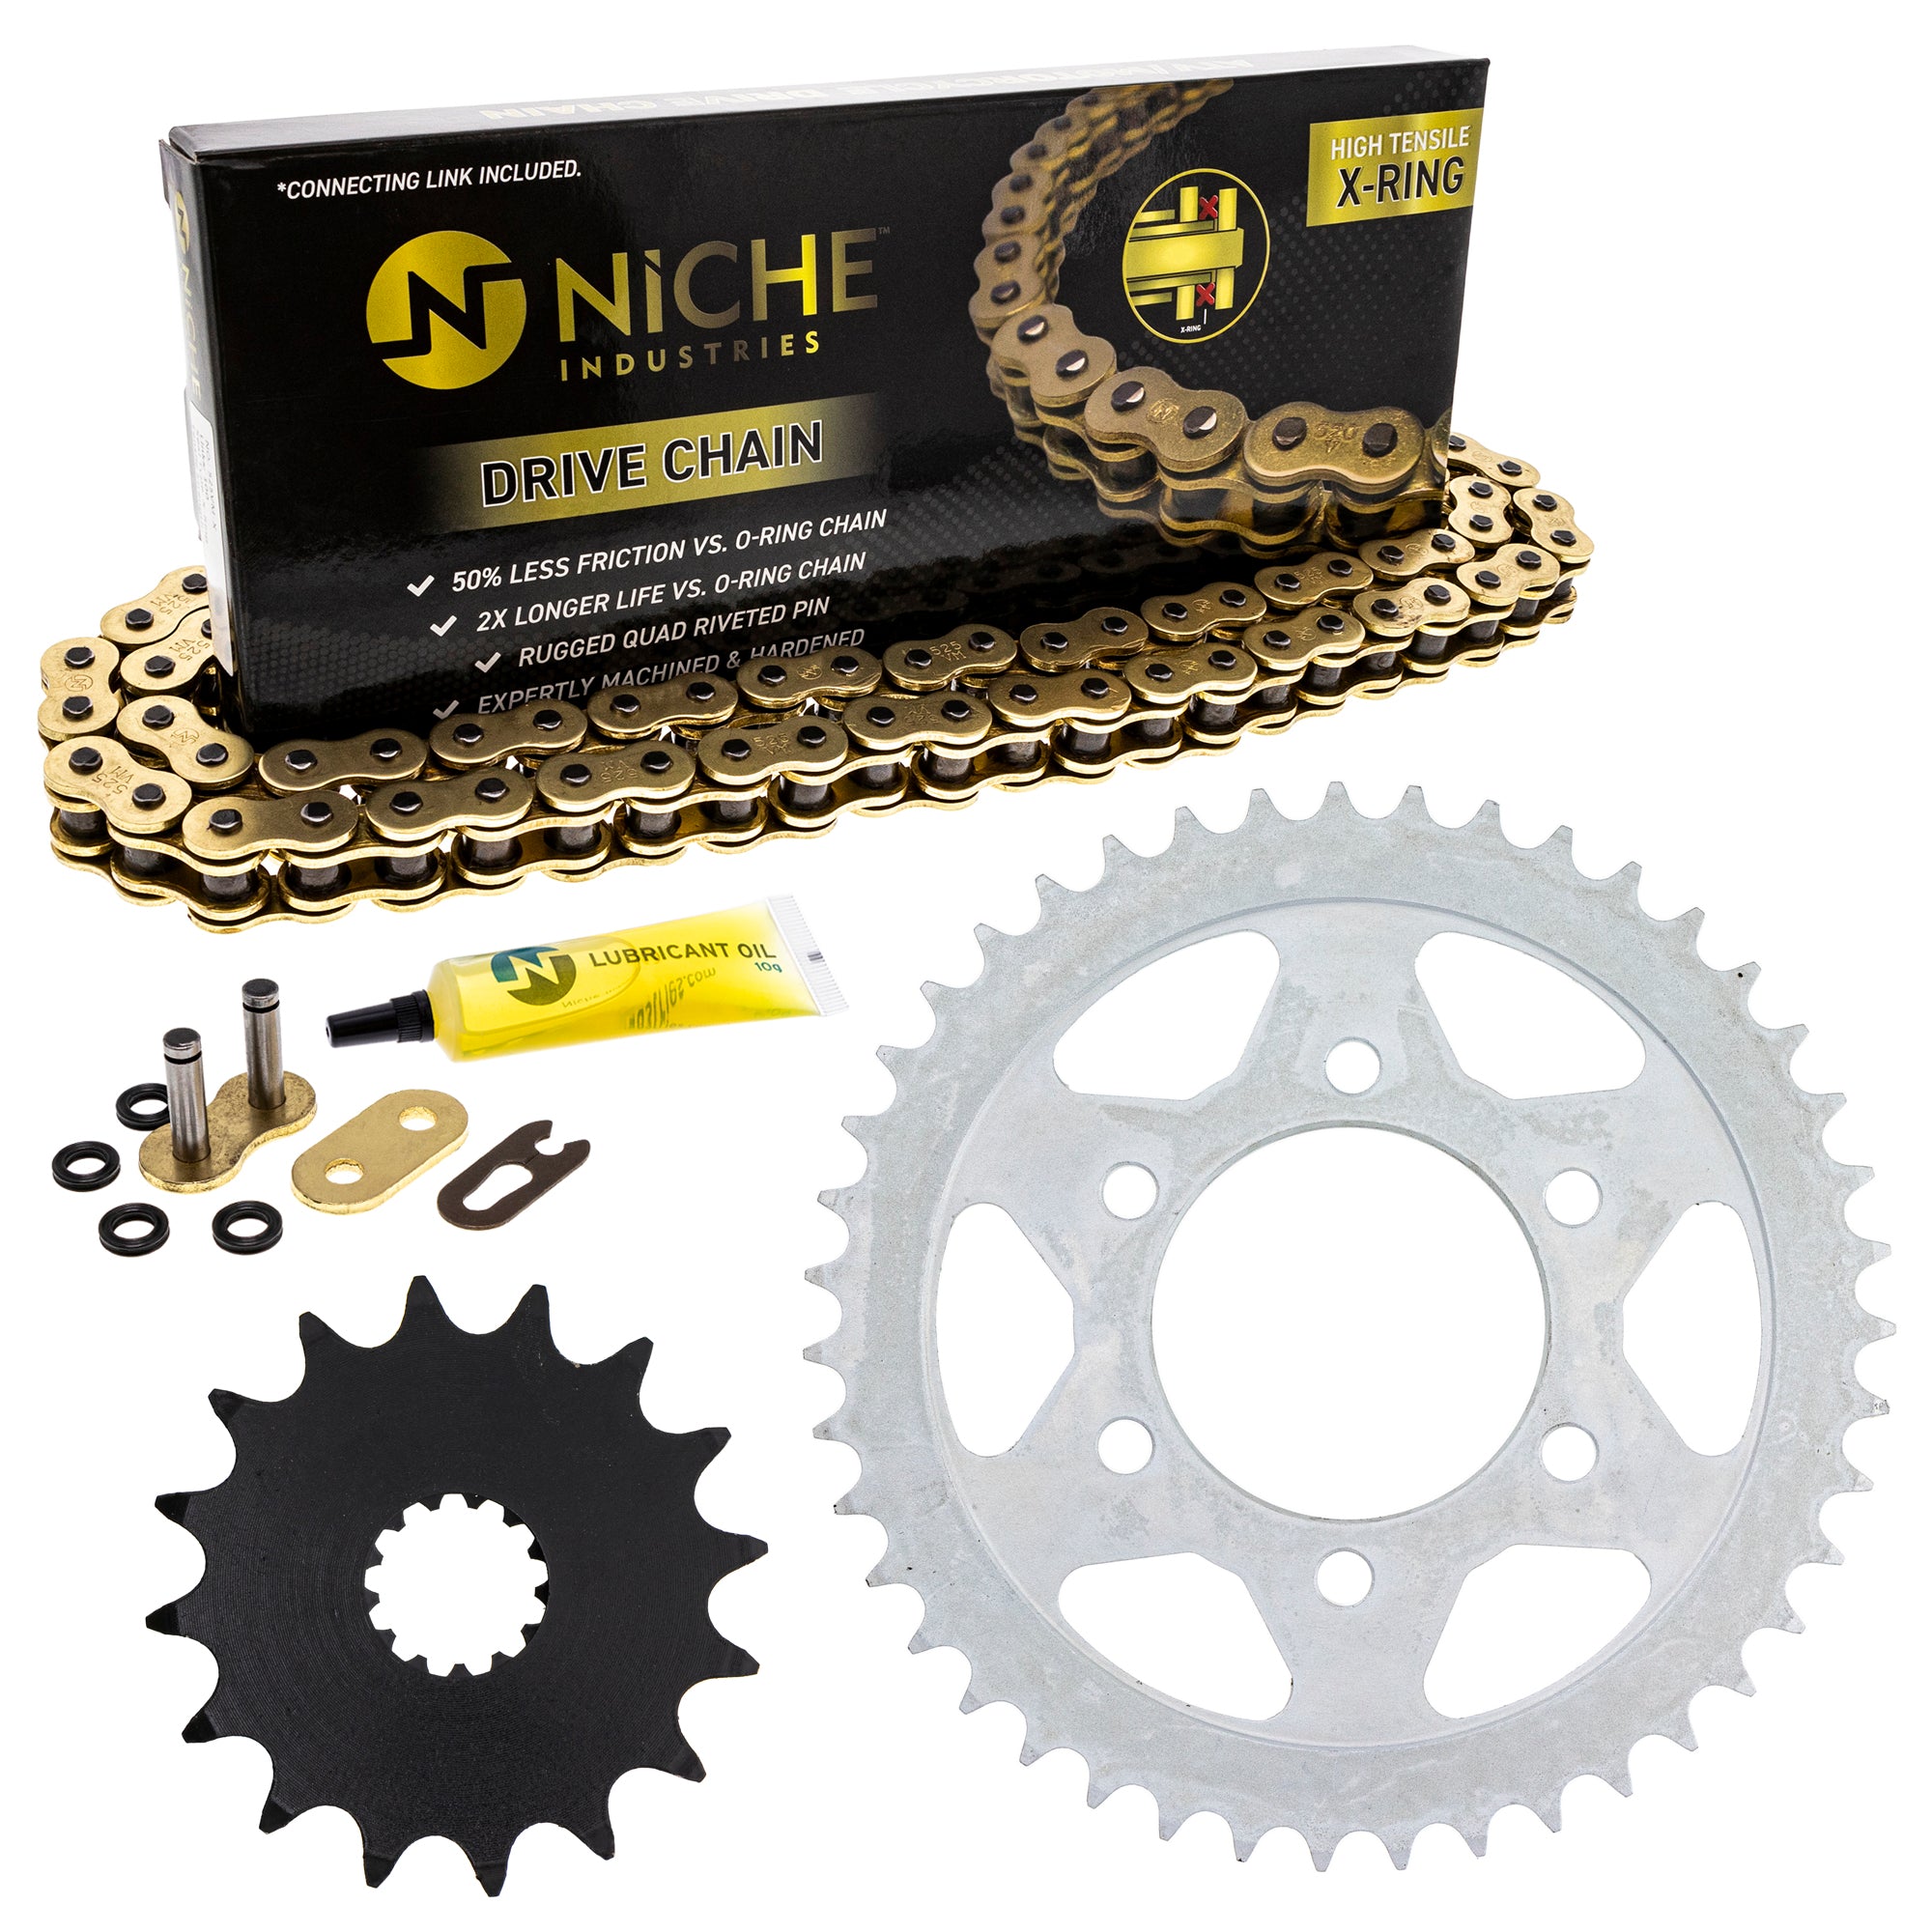 Drive Sprockets & Chain Kit for zOTHER Ninja 519-KCS1325K-K001 NICHE MK1004853